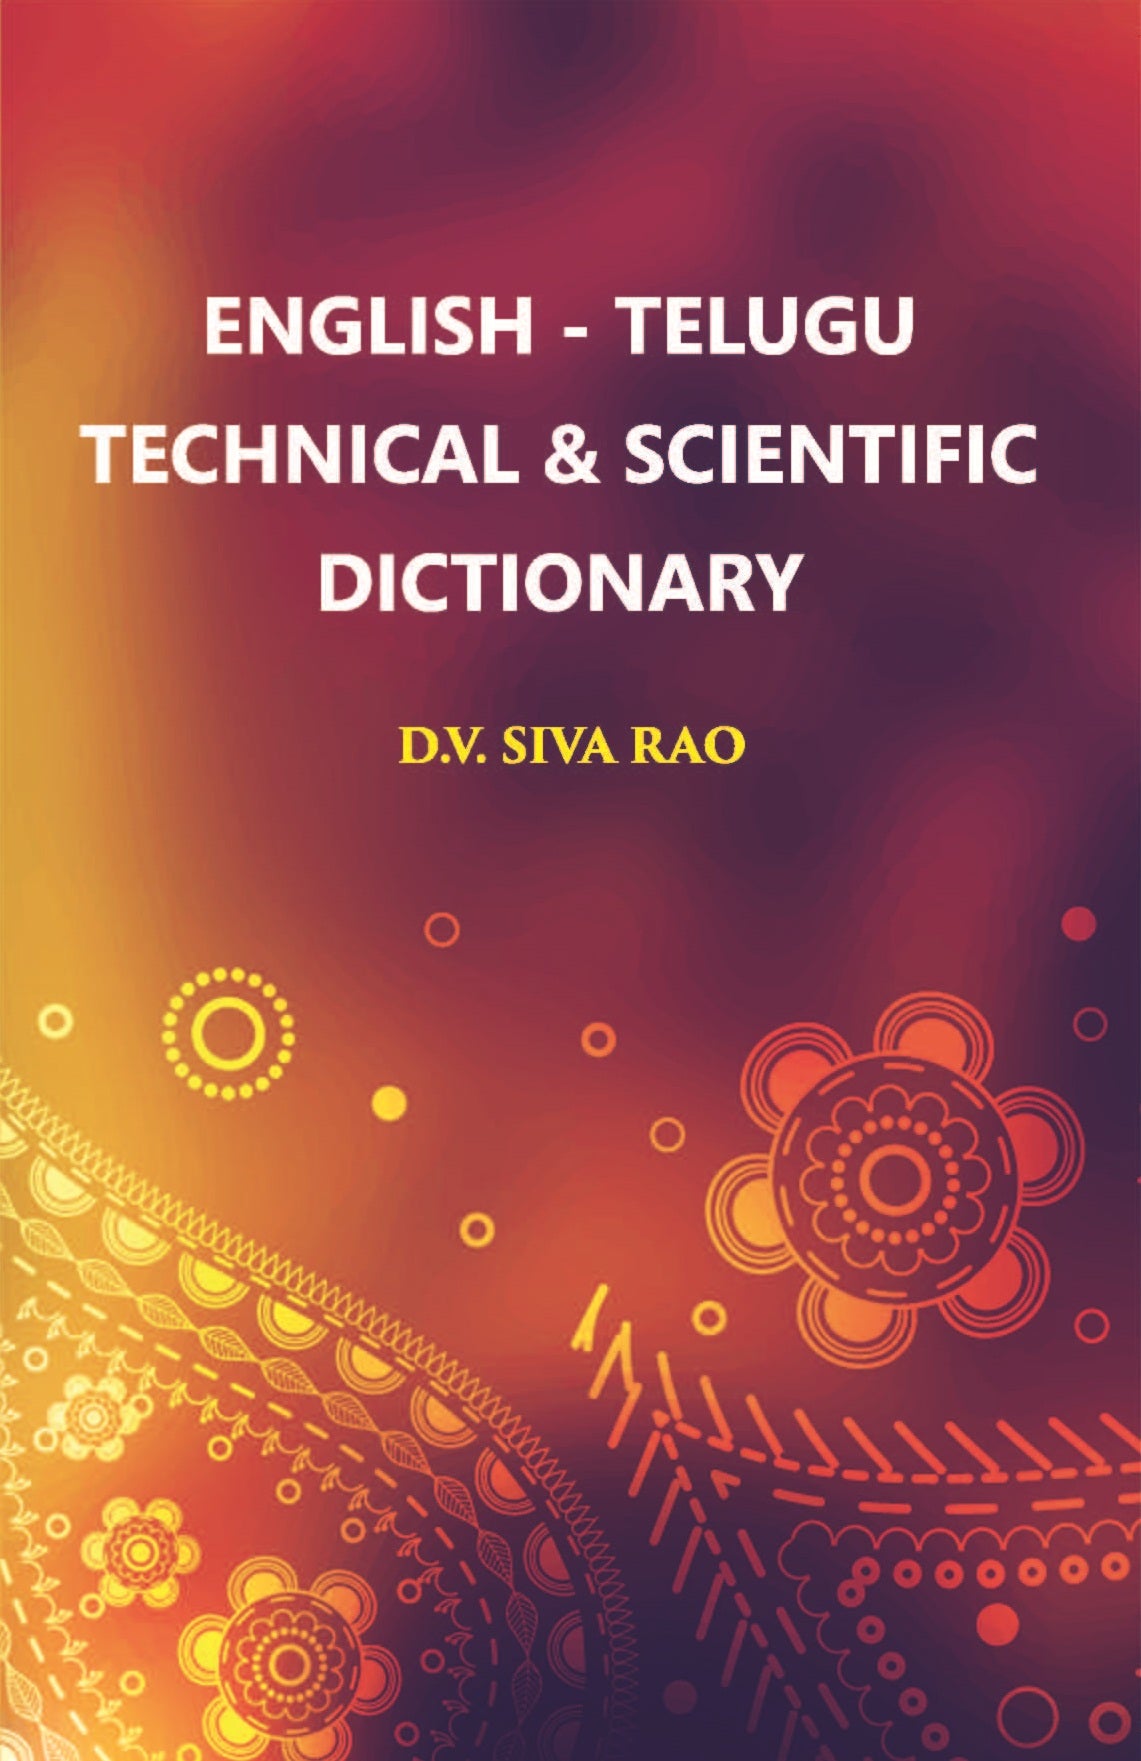 English - Telugu Technical & Scientific Dictionary